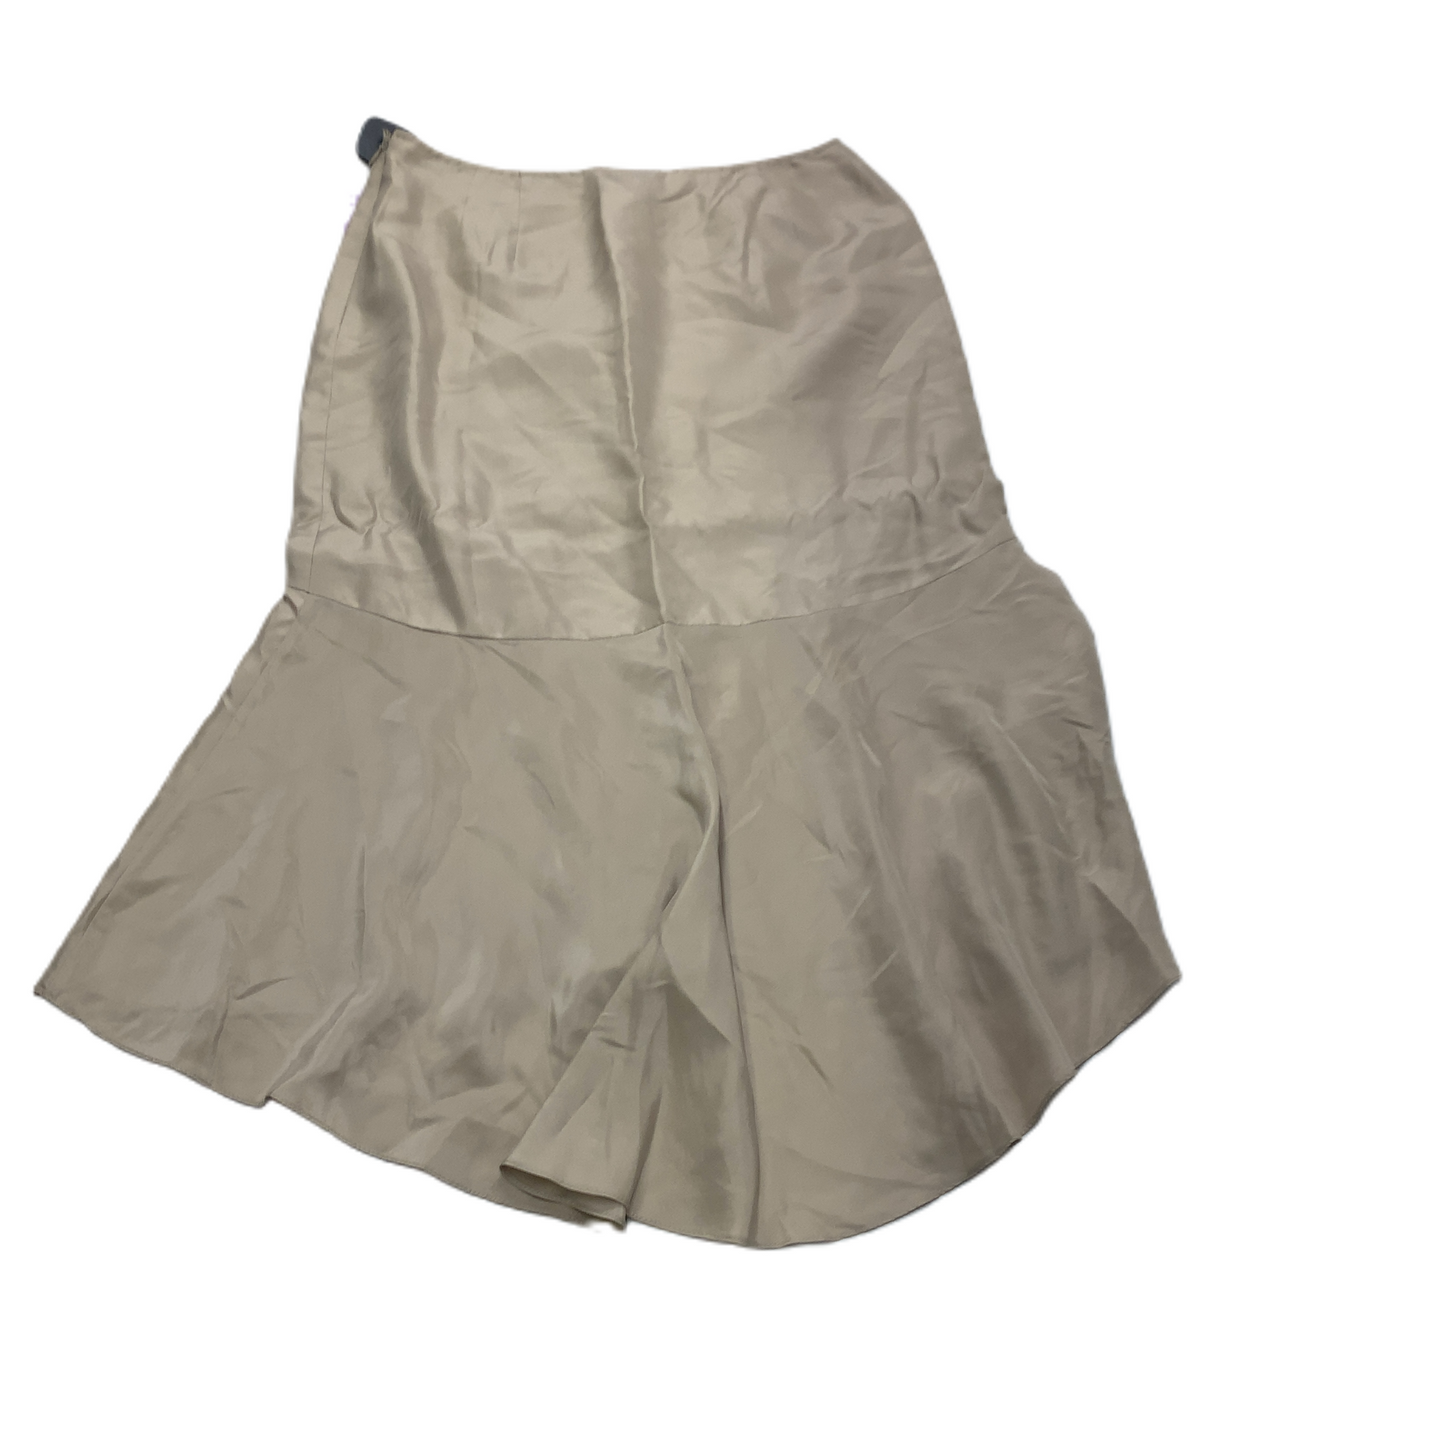 Skirt Midi By Colette Mordo  Size: S